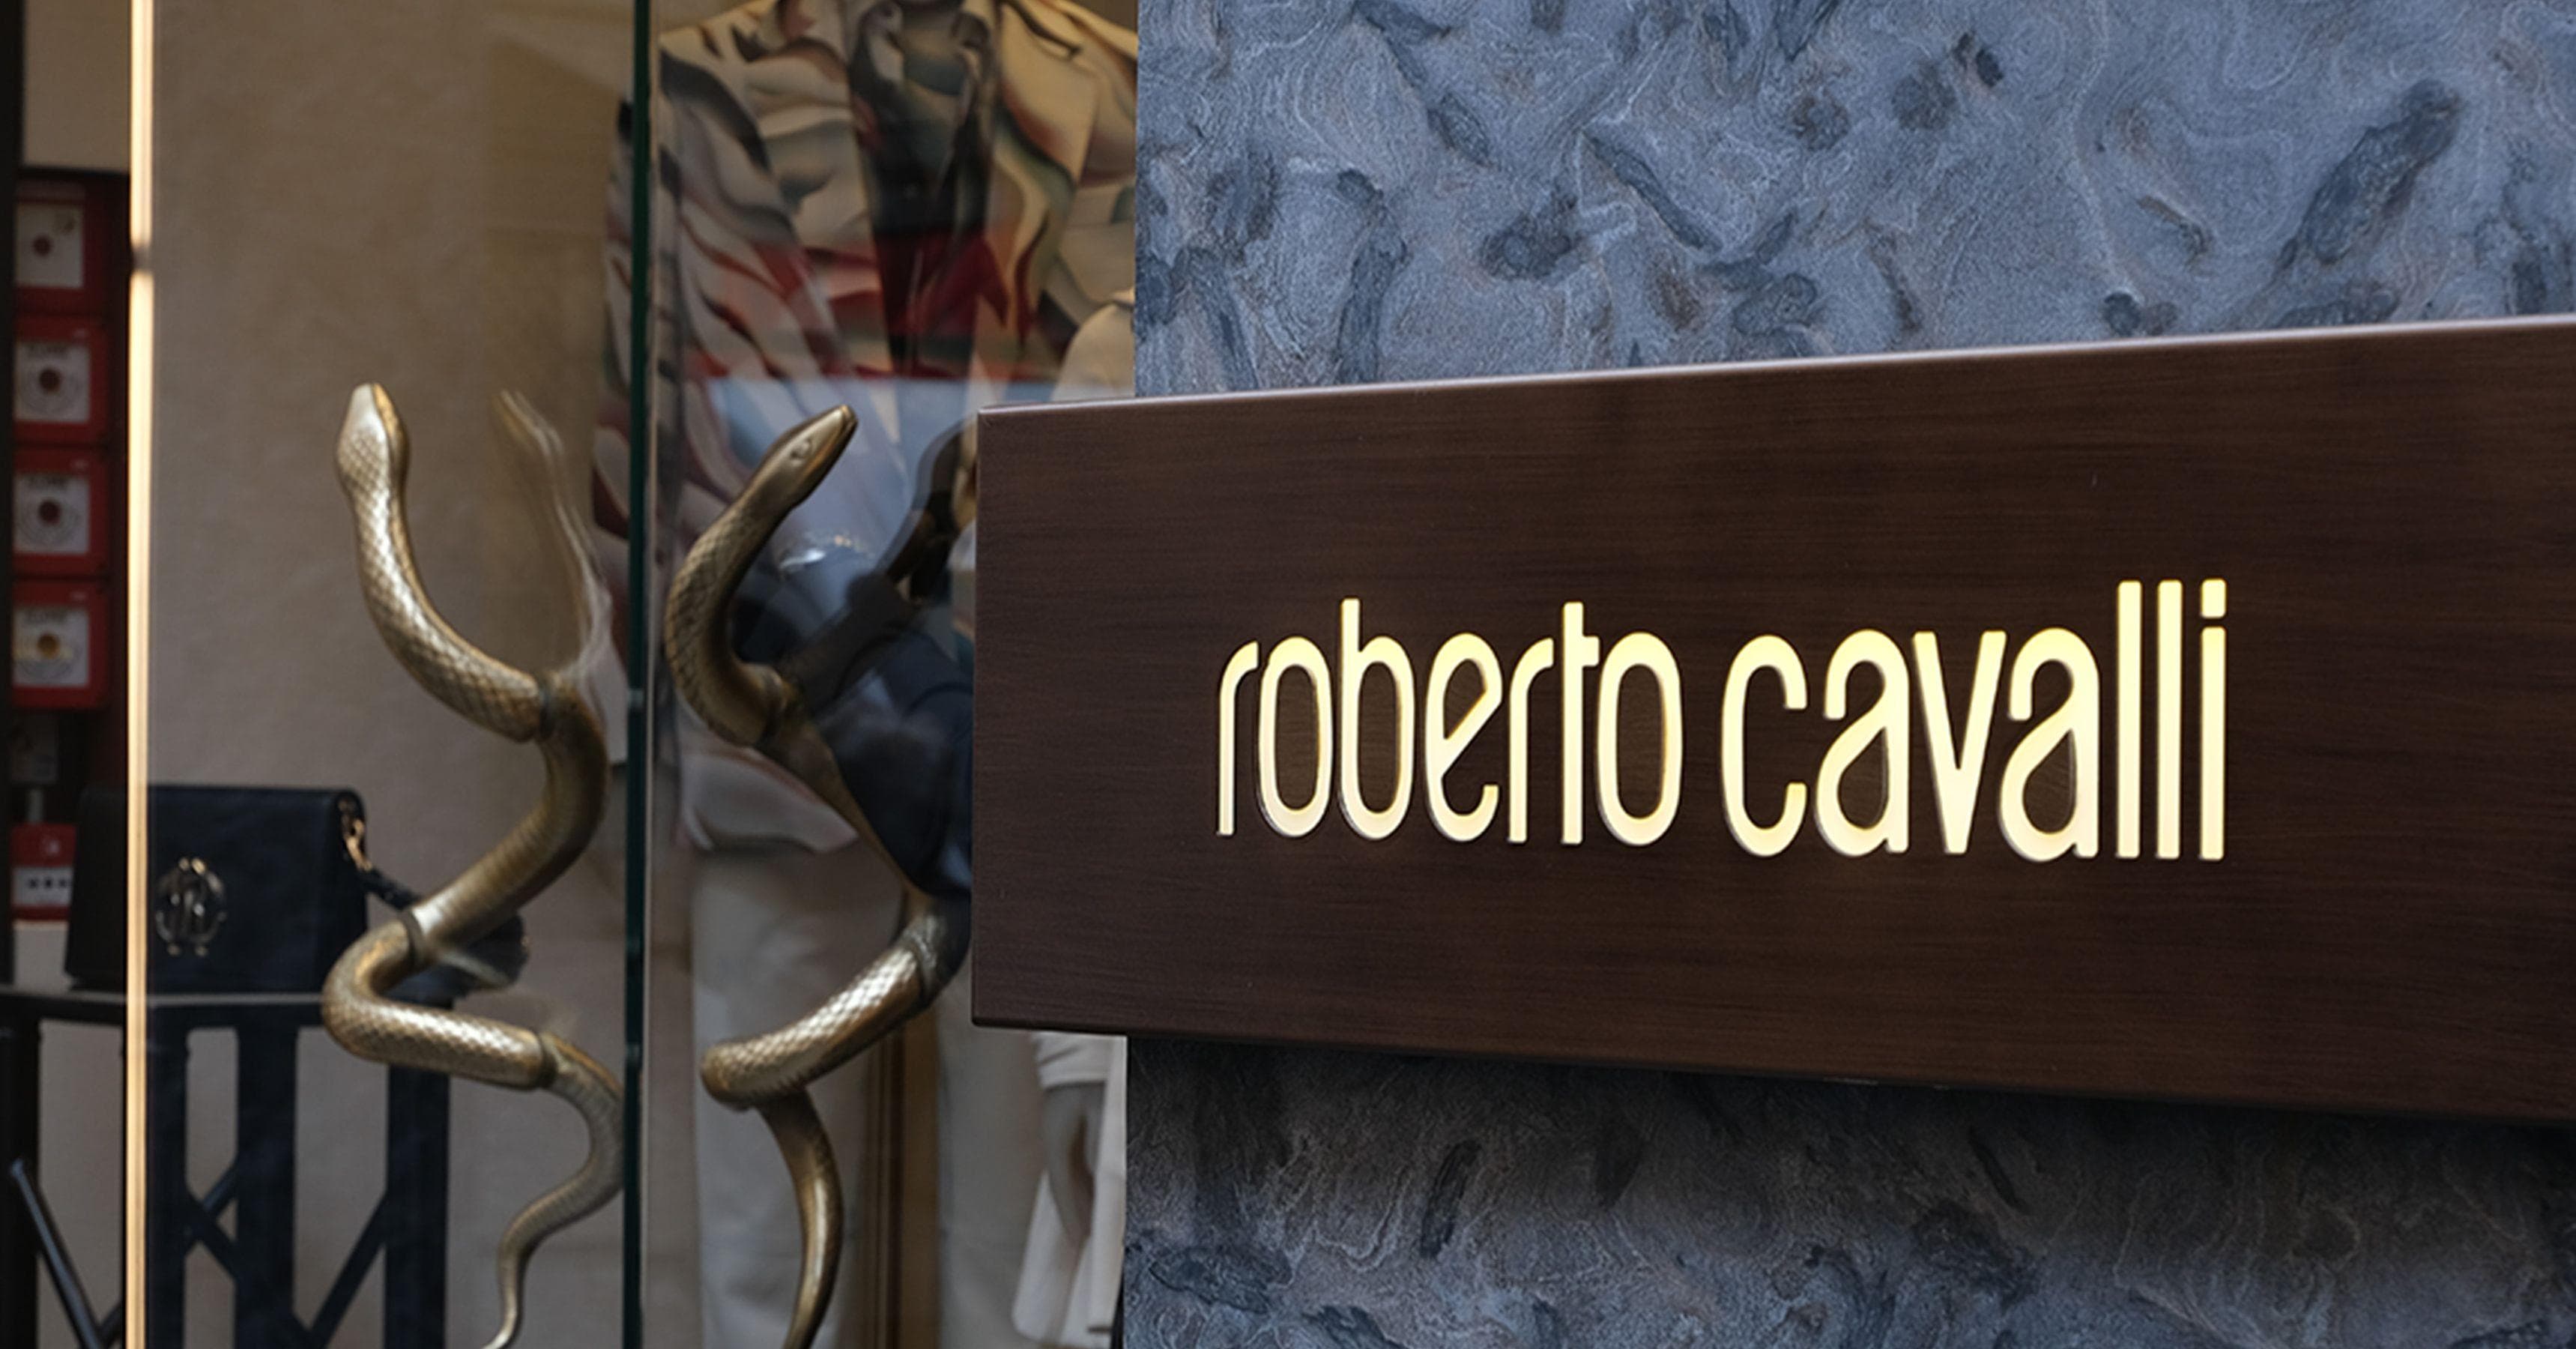 Roberto Cavalli Celebrities | List of Famous People Who Wear Roberto ...